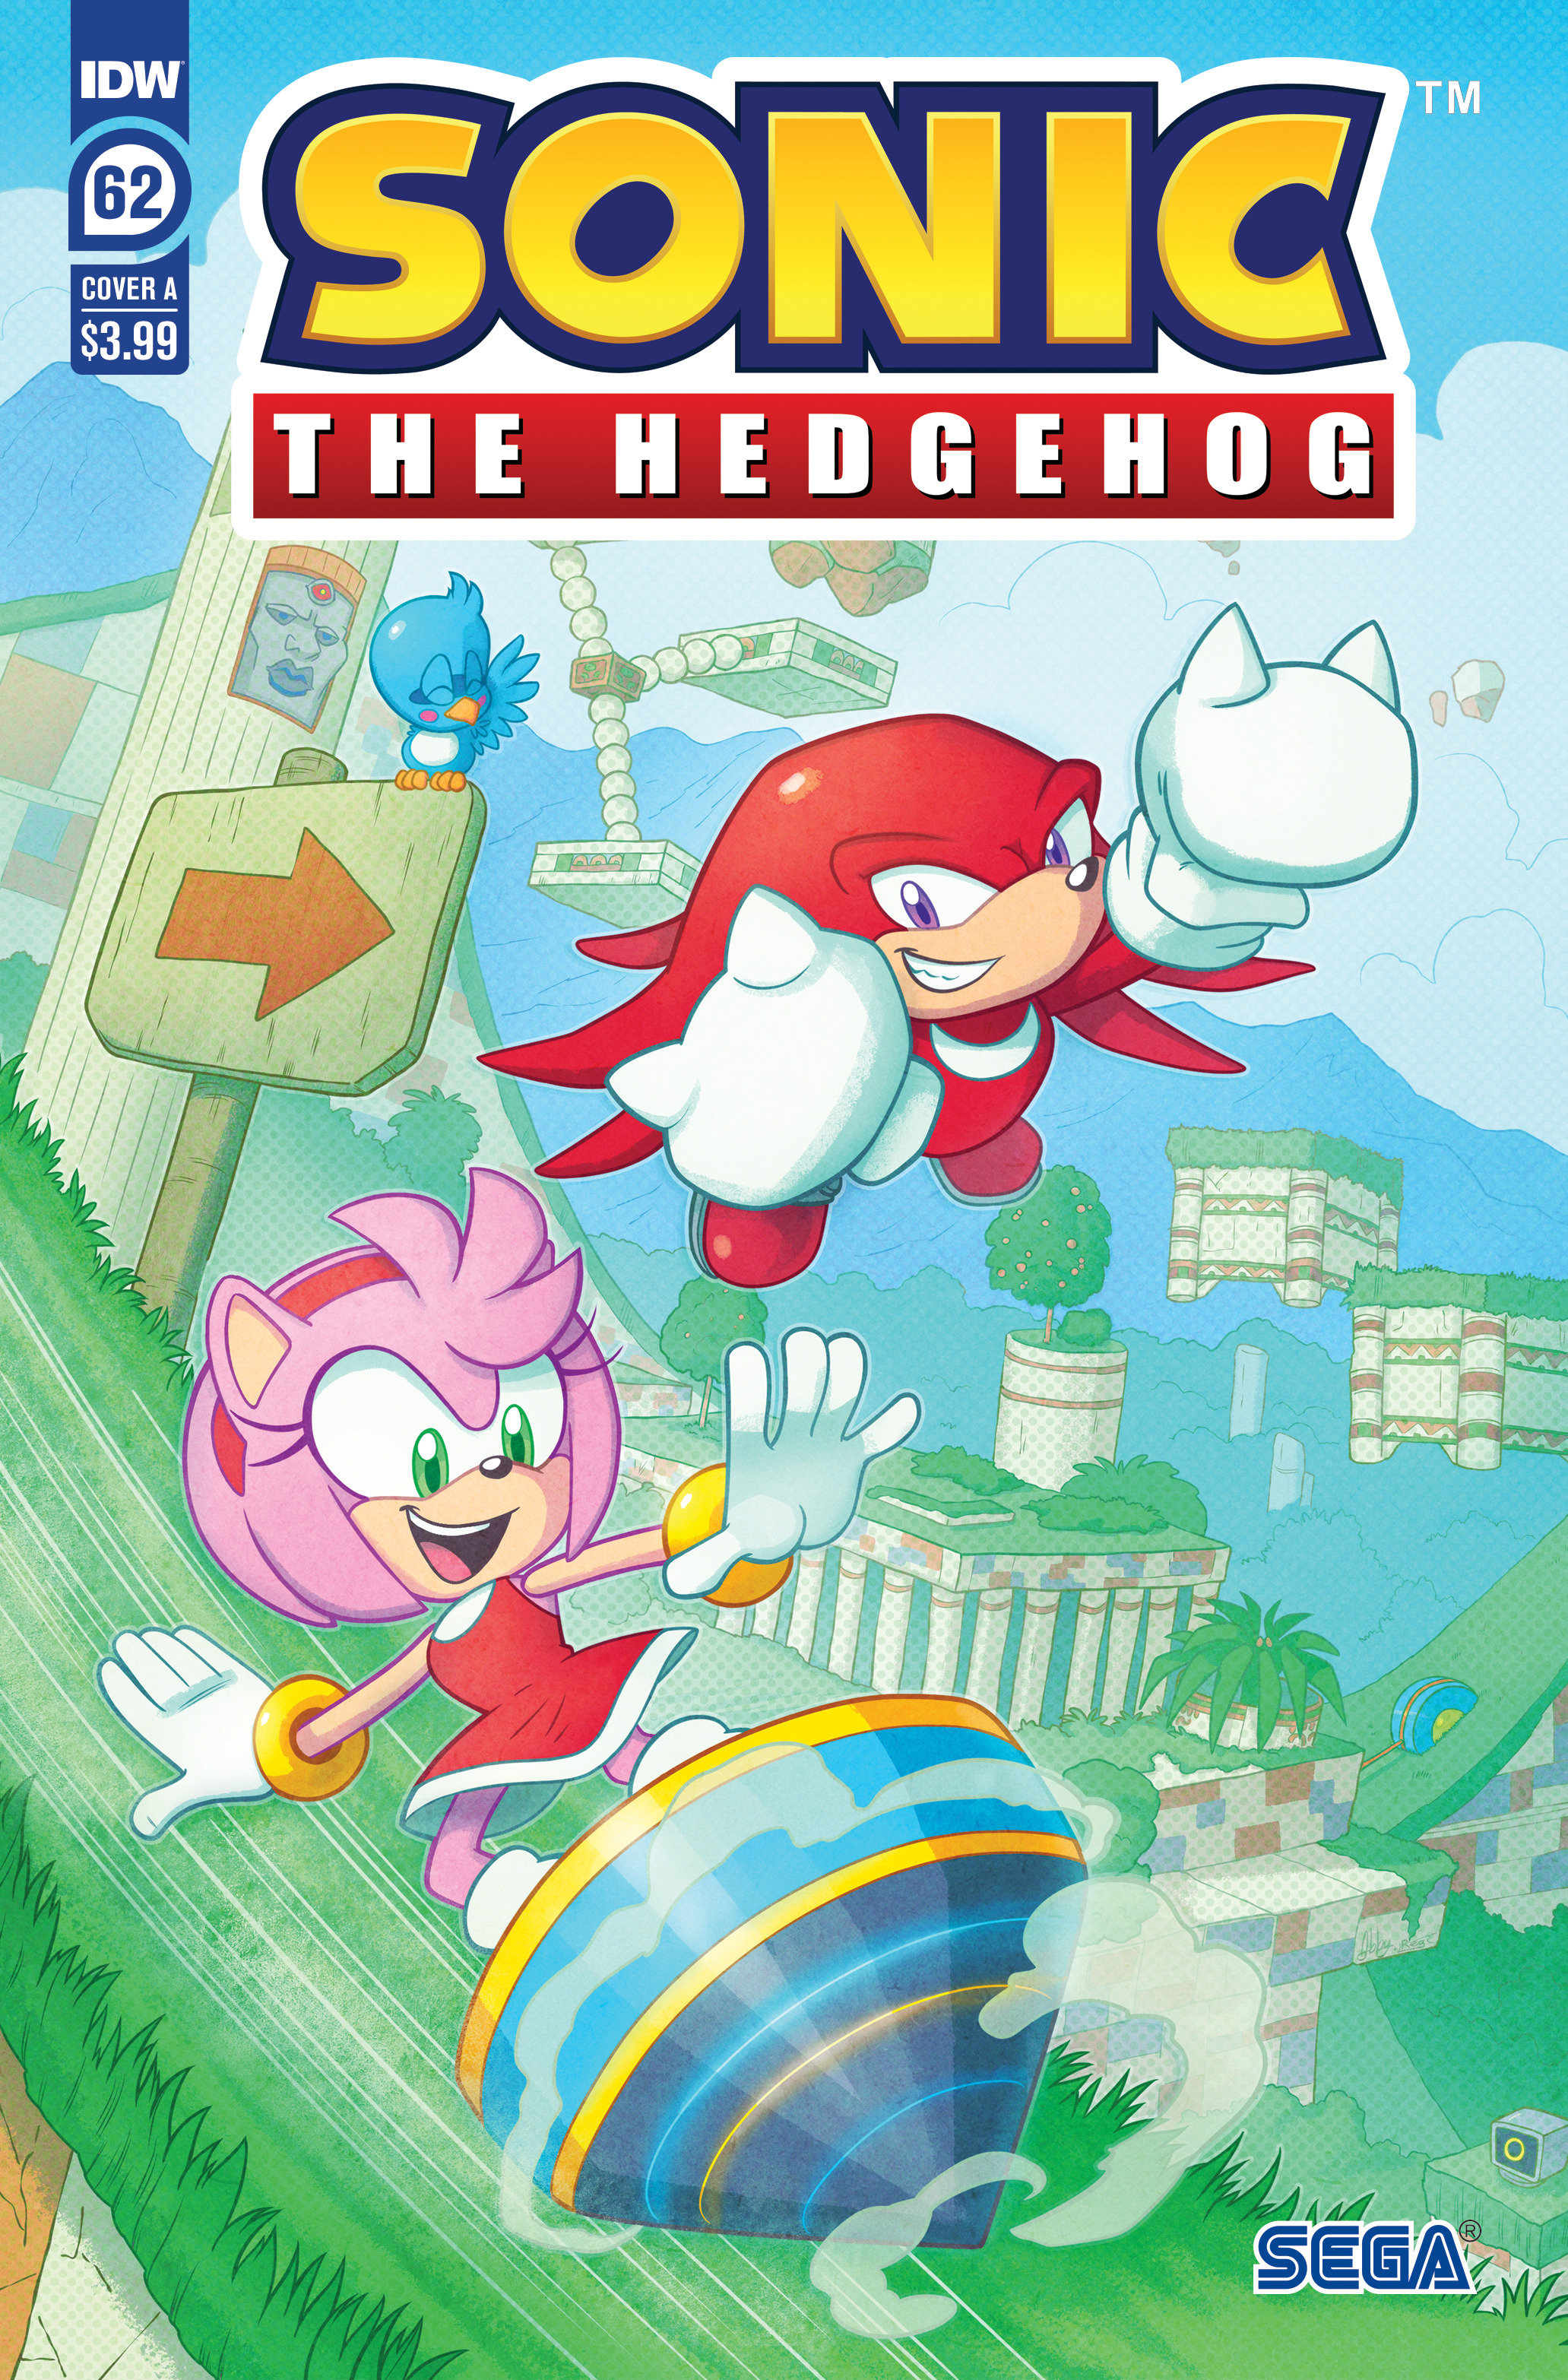 Sonic the Hedgehog #62 Cover A Bulmer